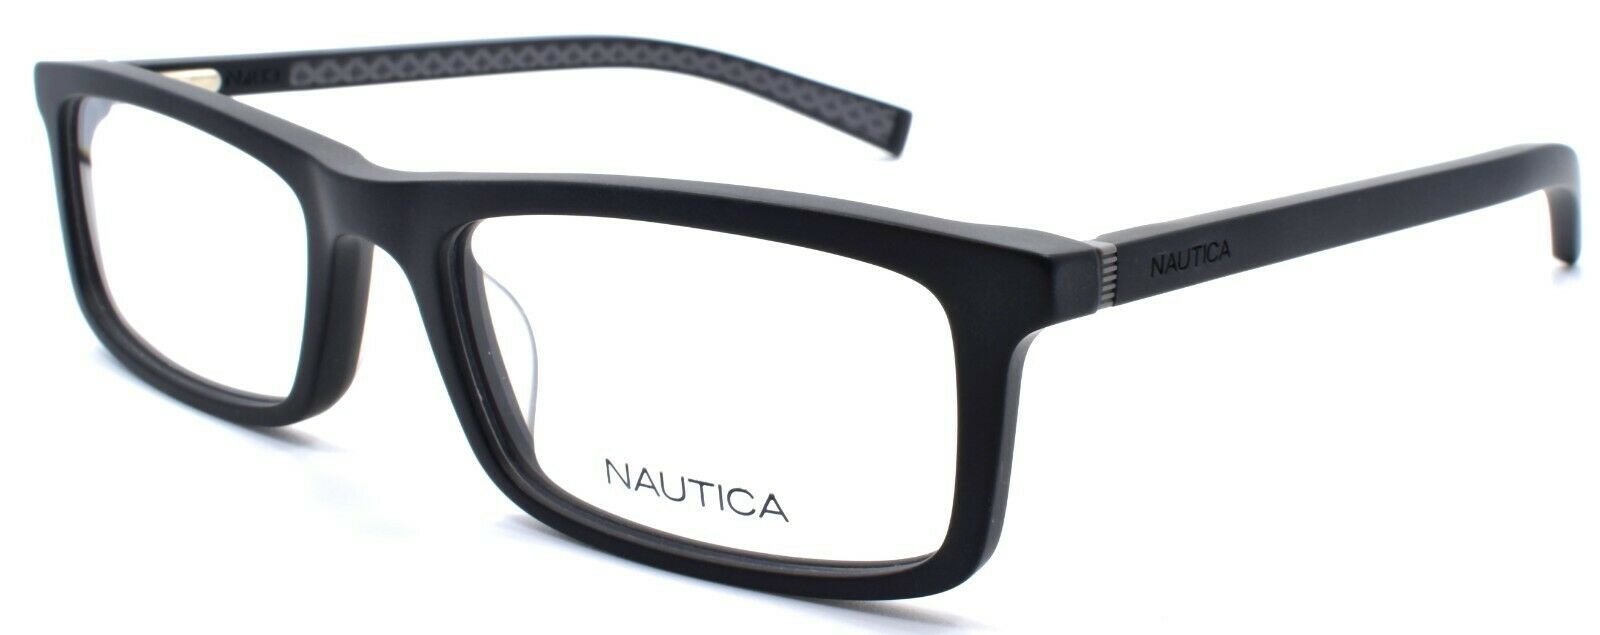 1-Nautica N8162 005 Men's Eyeglasses Frames 53-18-140 Matte Black-688940465440-IKSpecs